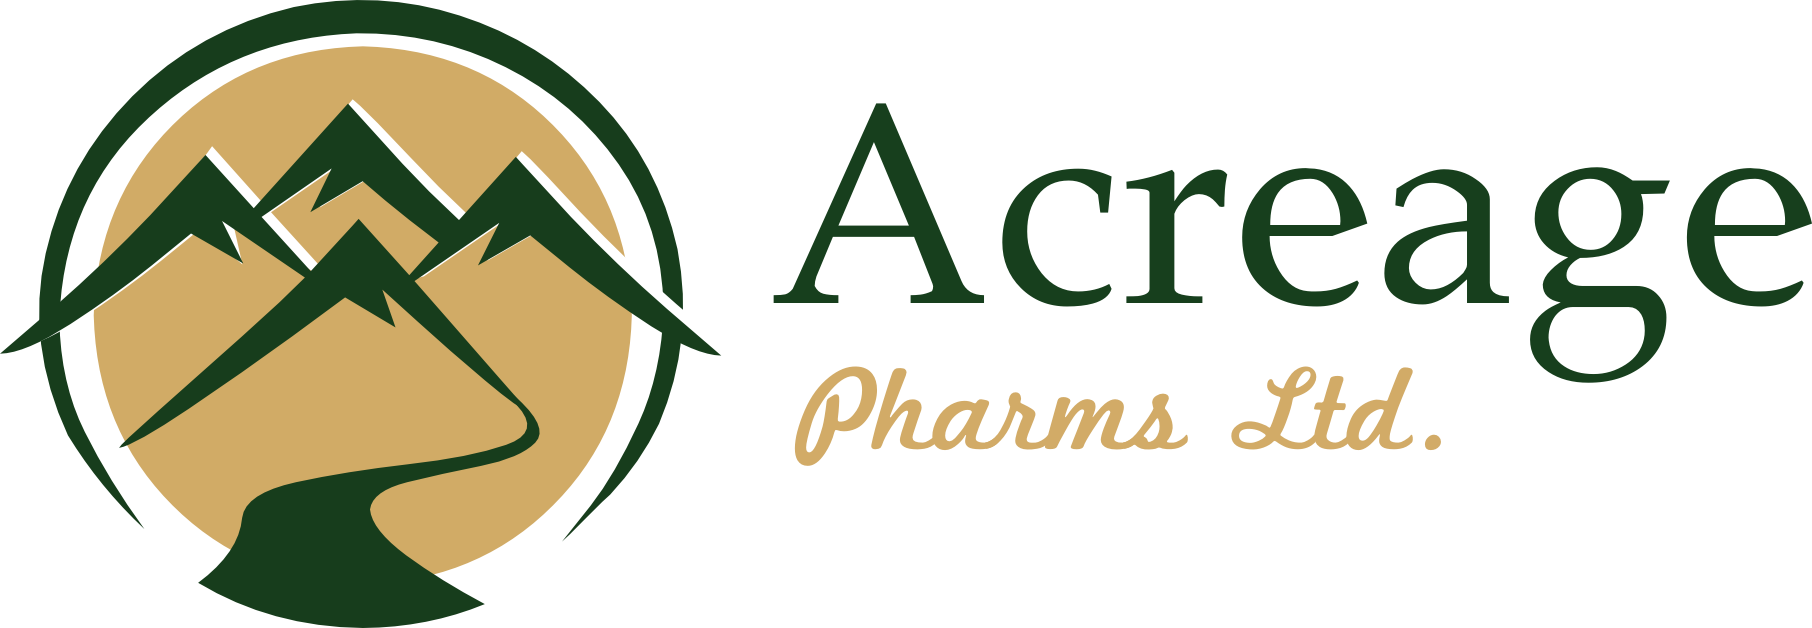 Acreage Pharms Ltd | Brand